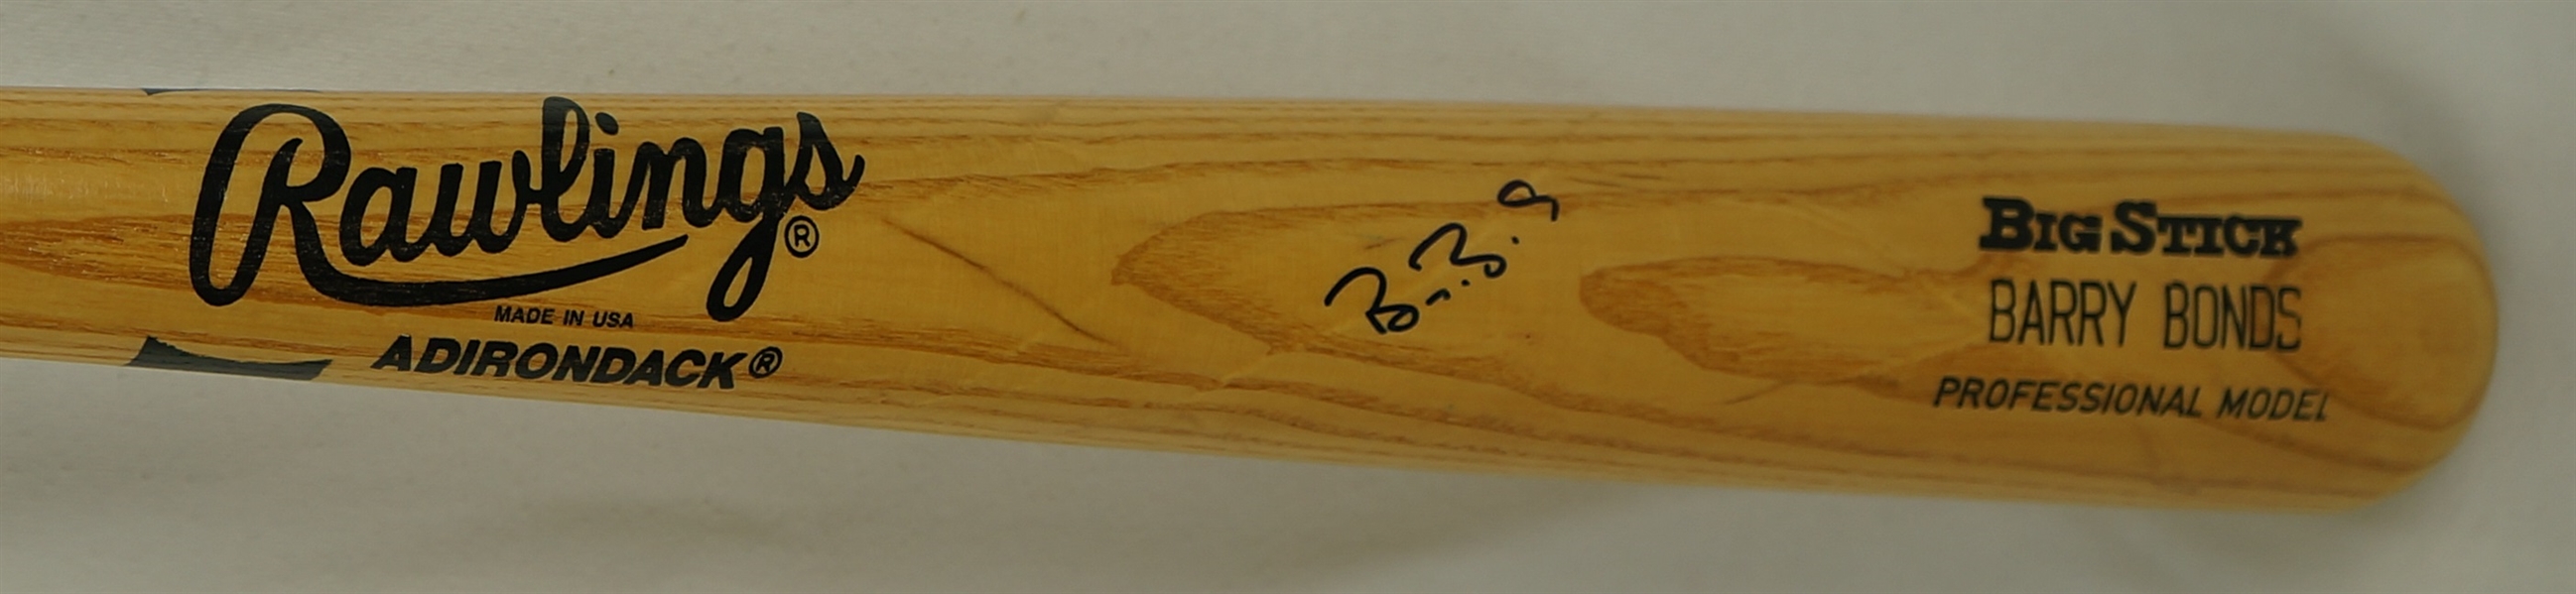 Barry Bonds Autographed Adirondack Big Stick Bat